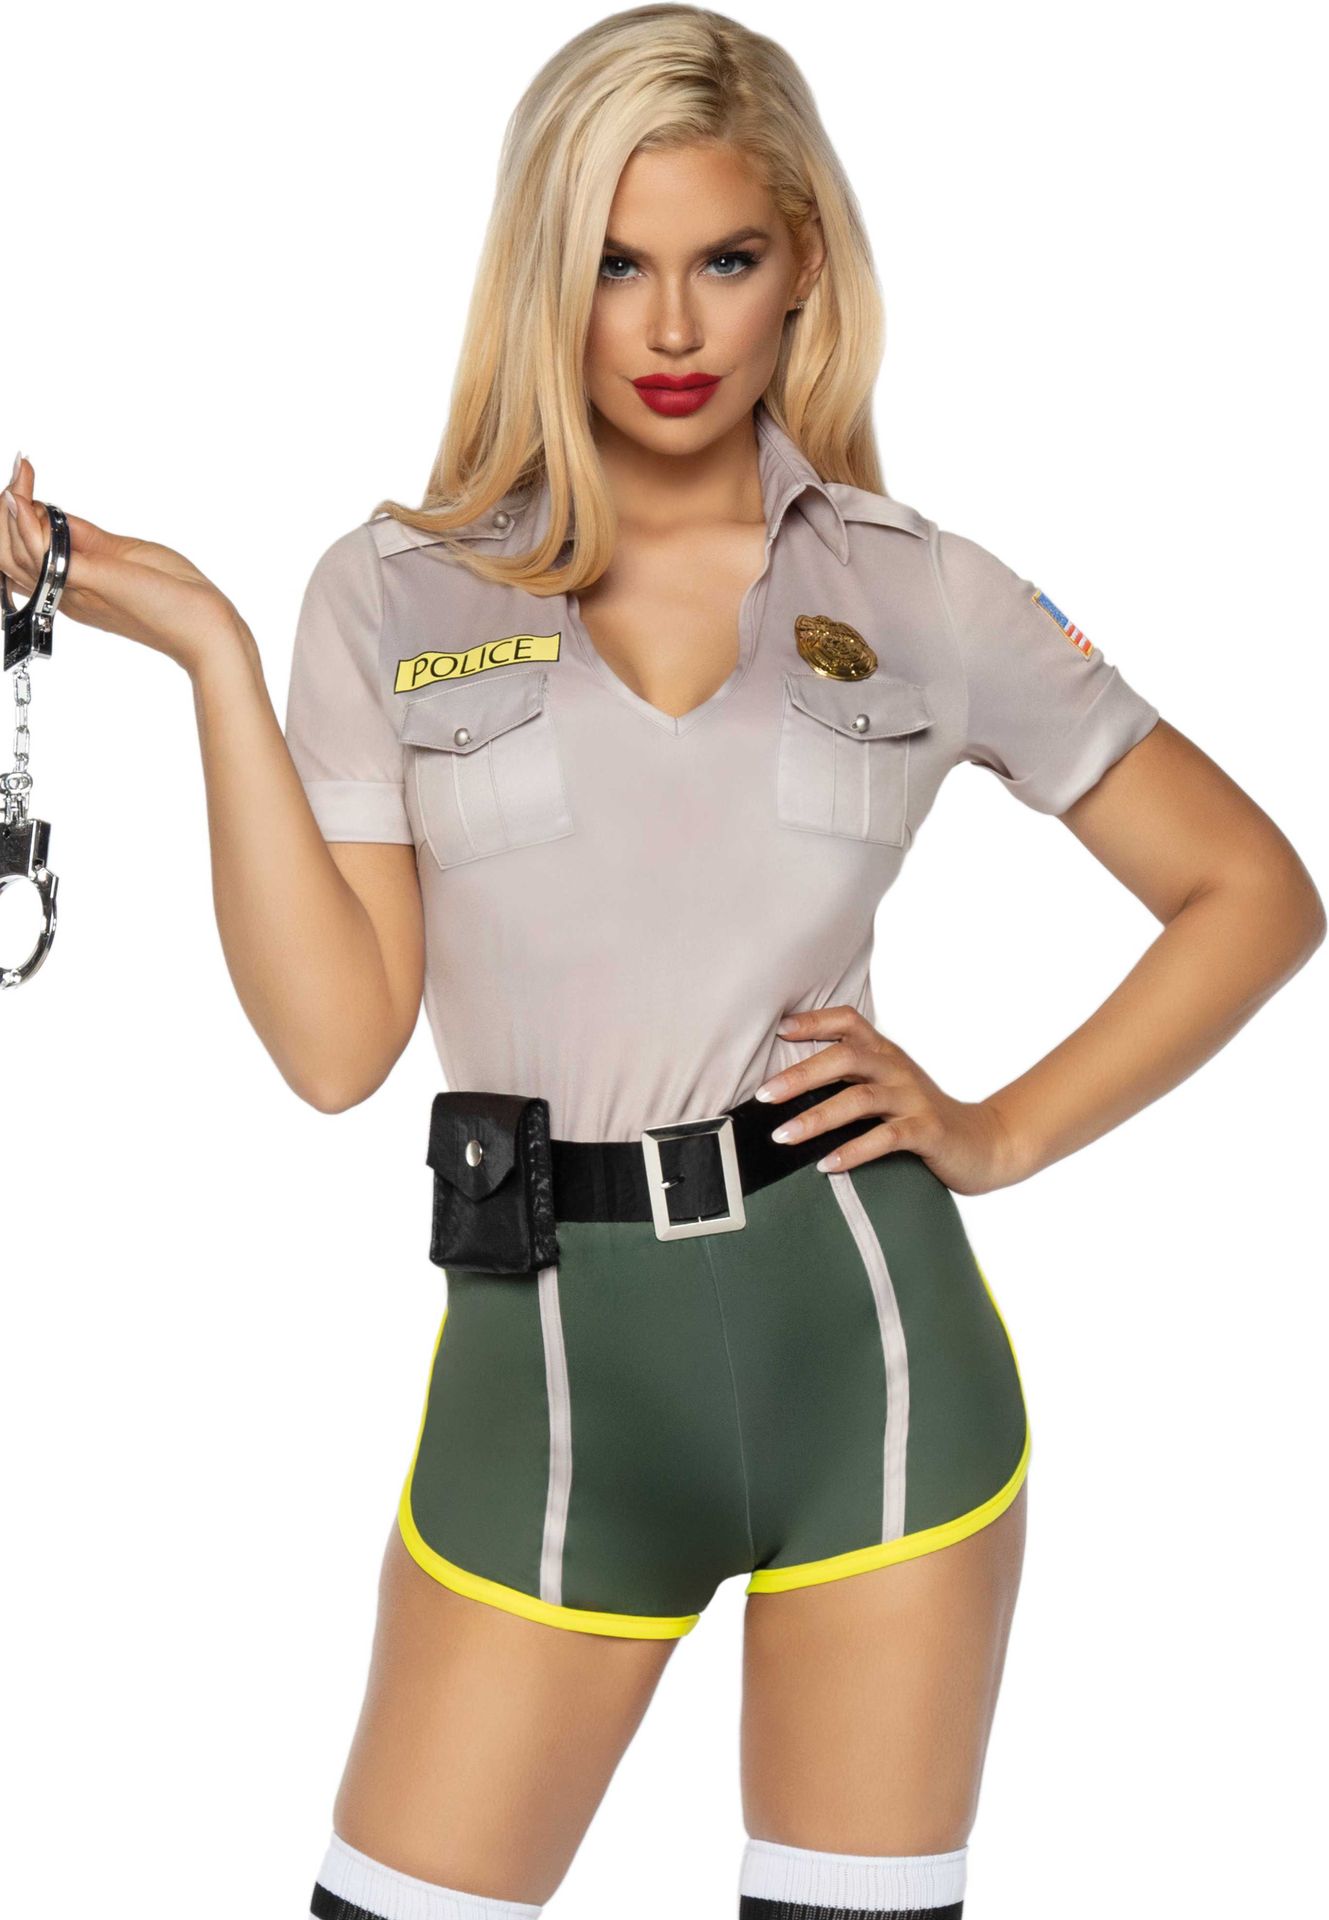 USA sexy politie agente